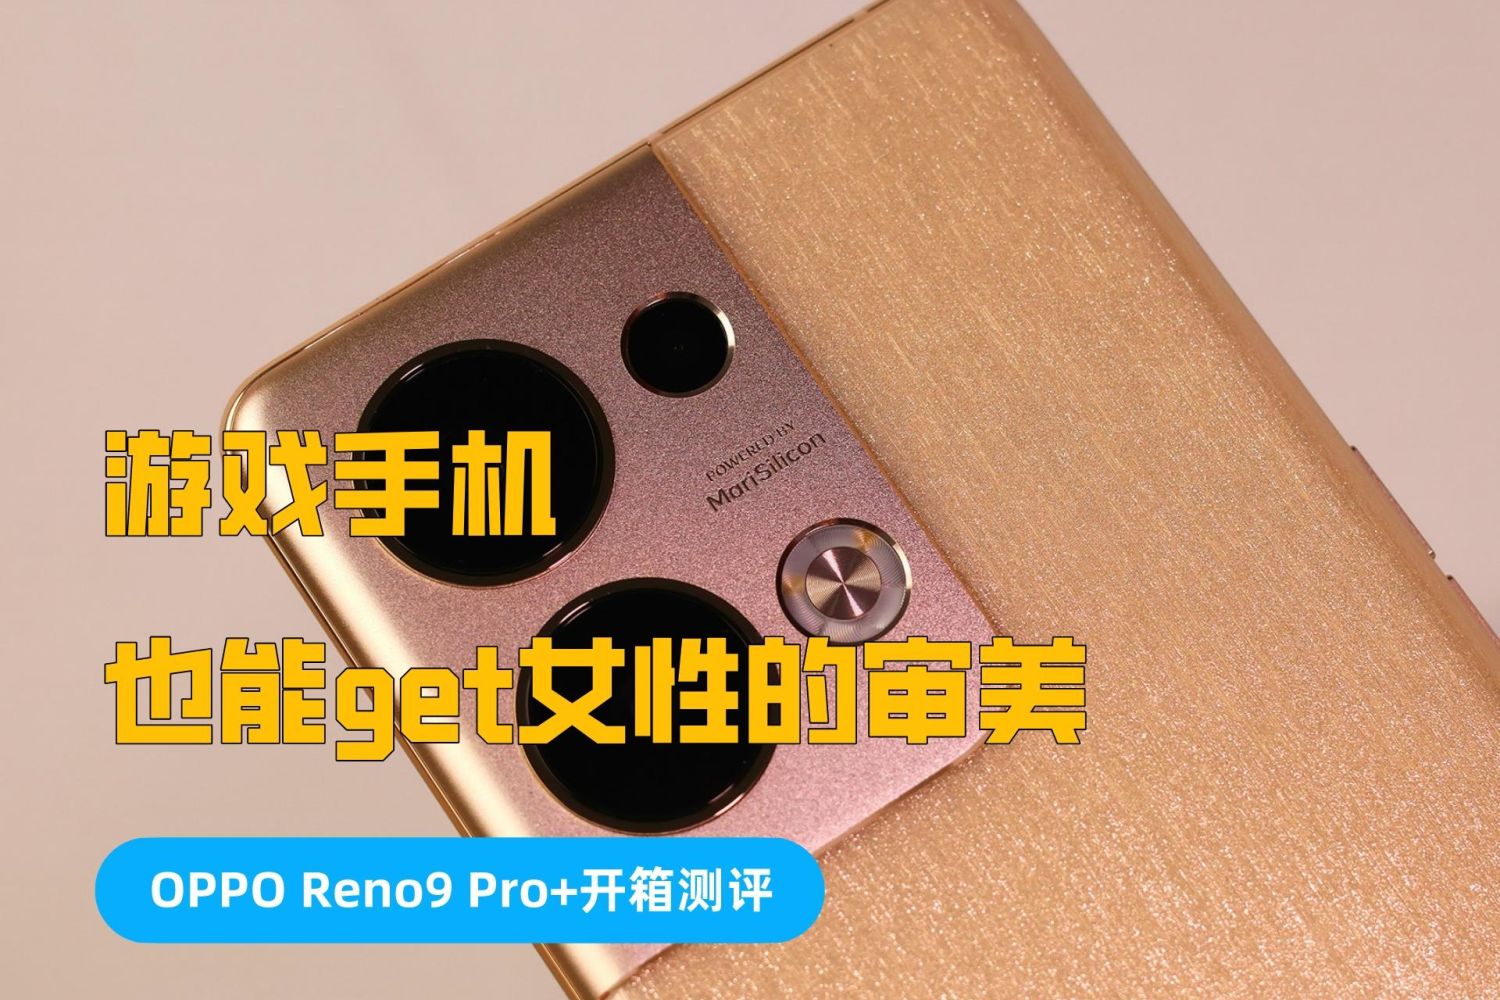 OPPO Reno9 Pro+开箱测评